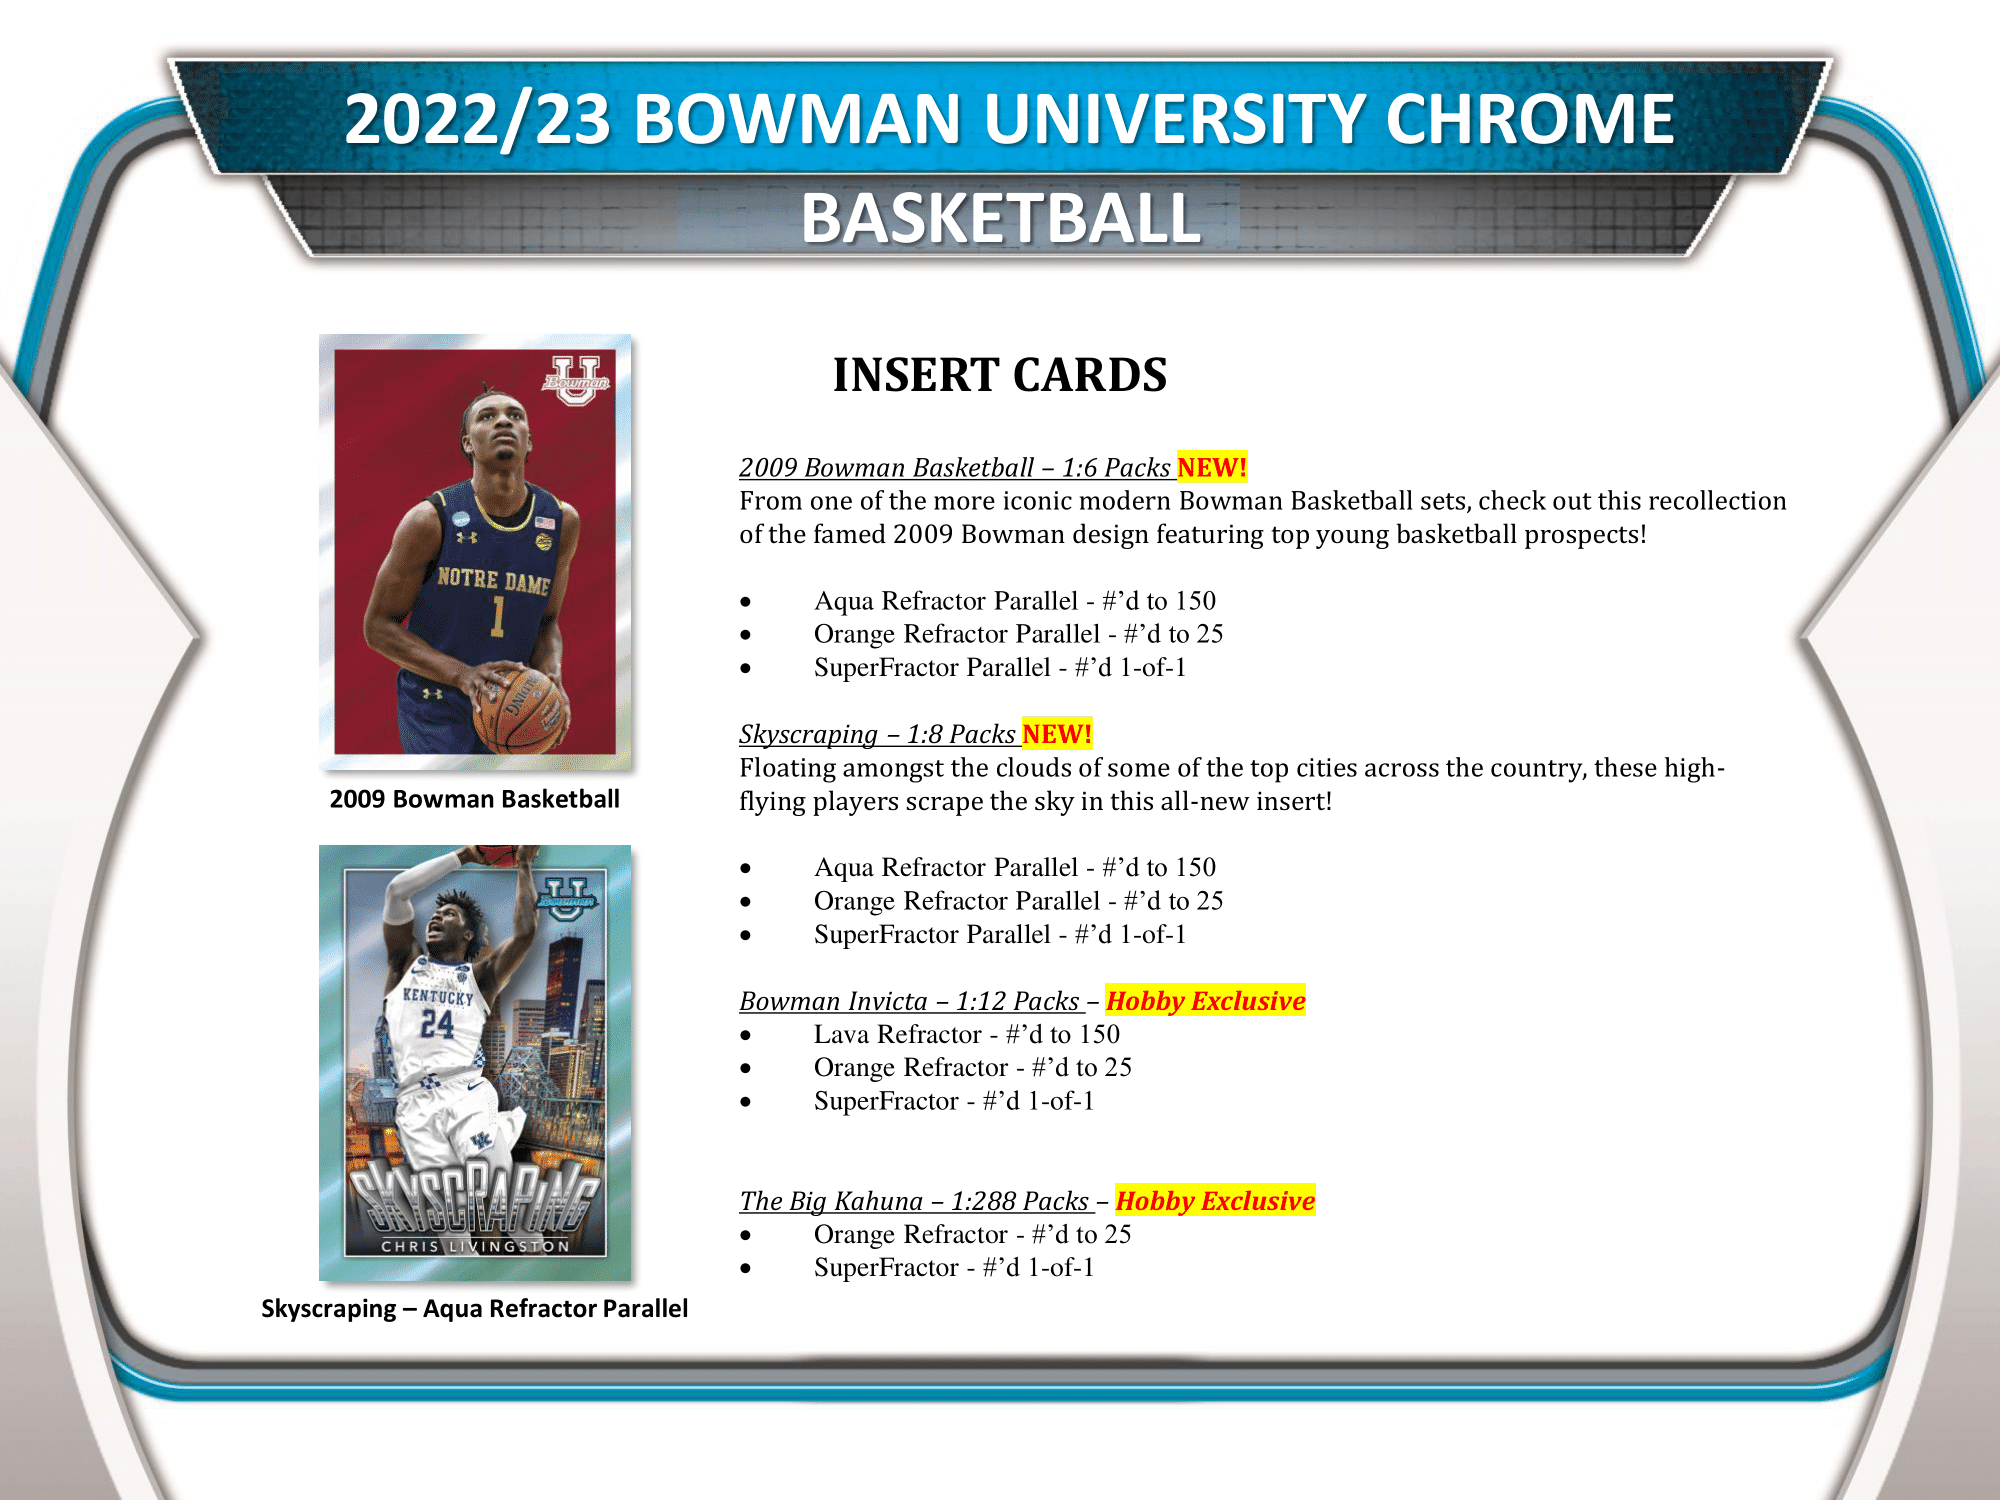 Topps - 2022/23 Bowman University Chrome Basketball (NBA) - Hobby Box (24 Packs) - The Card Vault